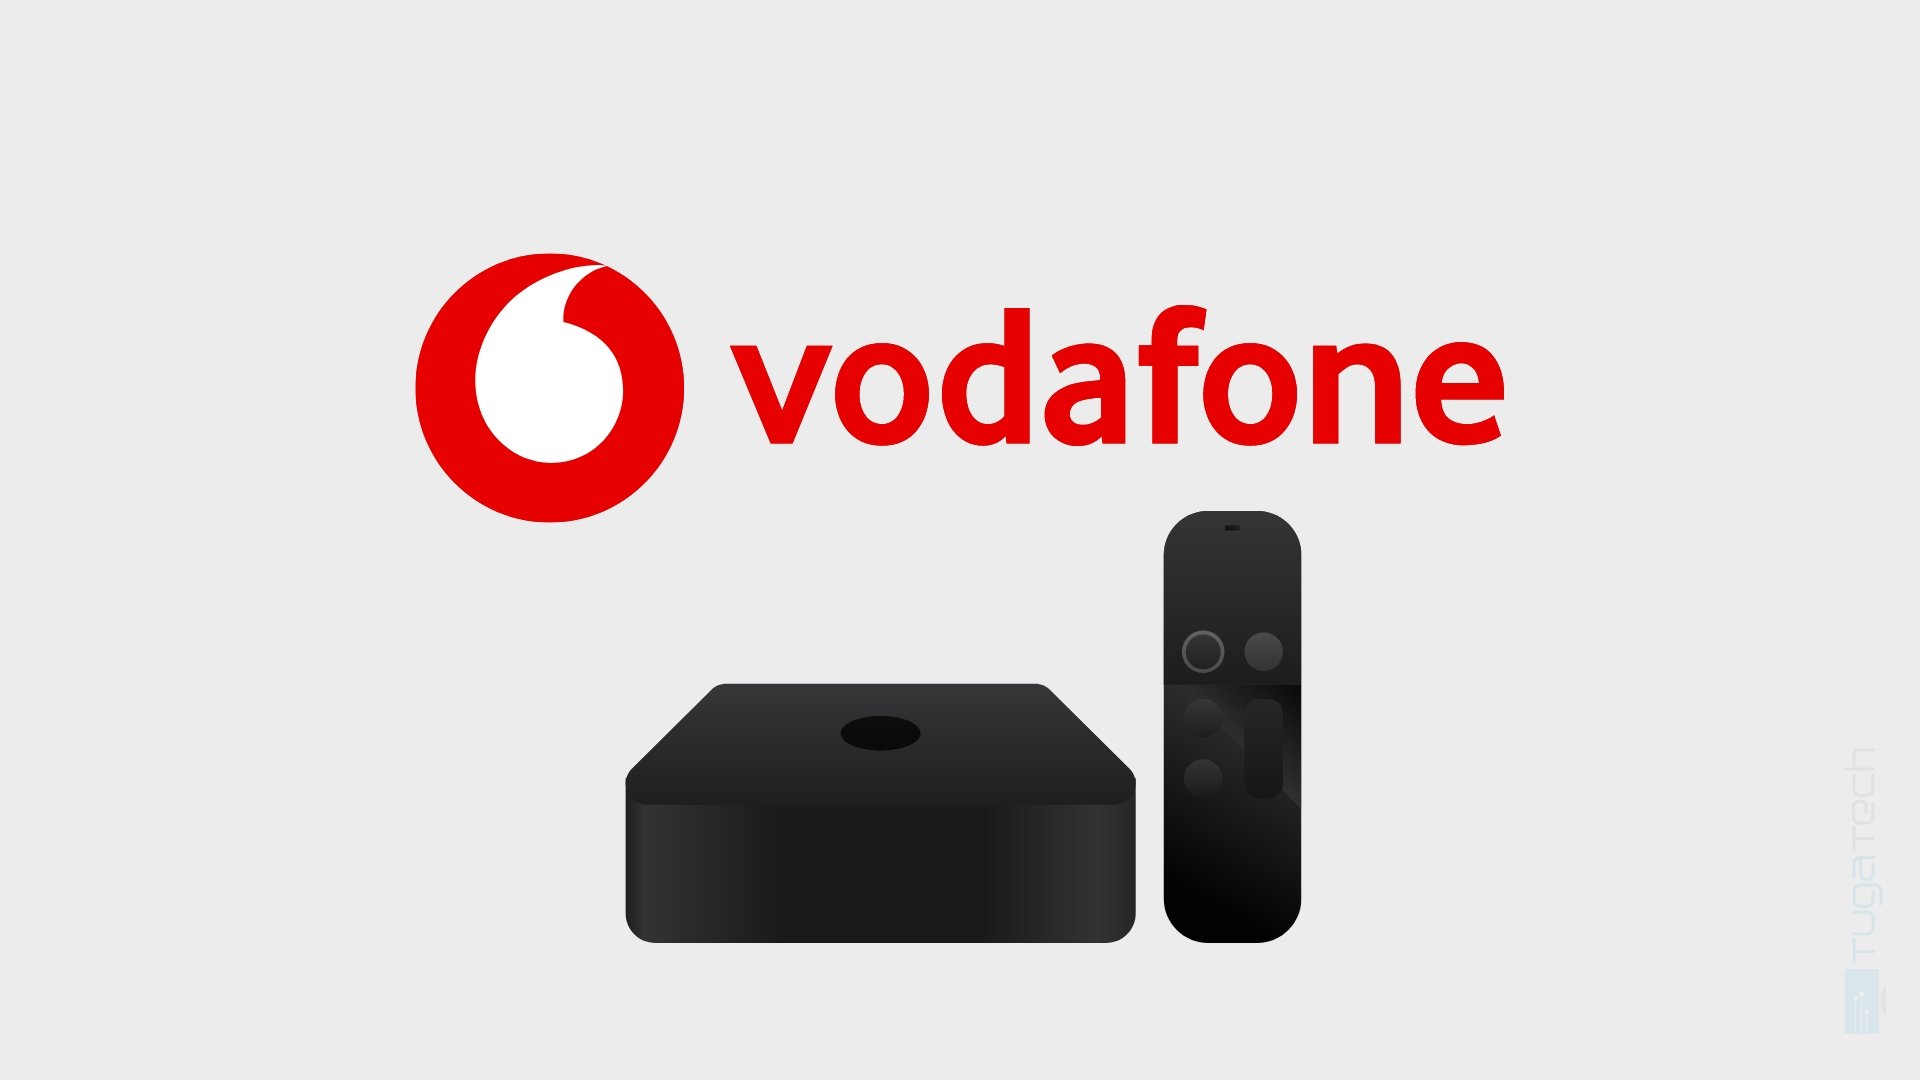 Vodafone agora disponível na Apple TV